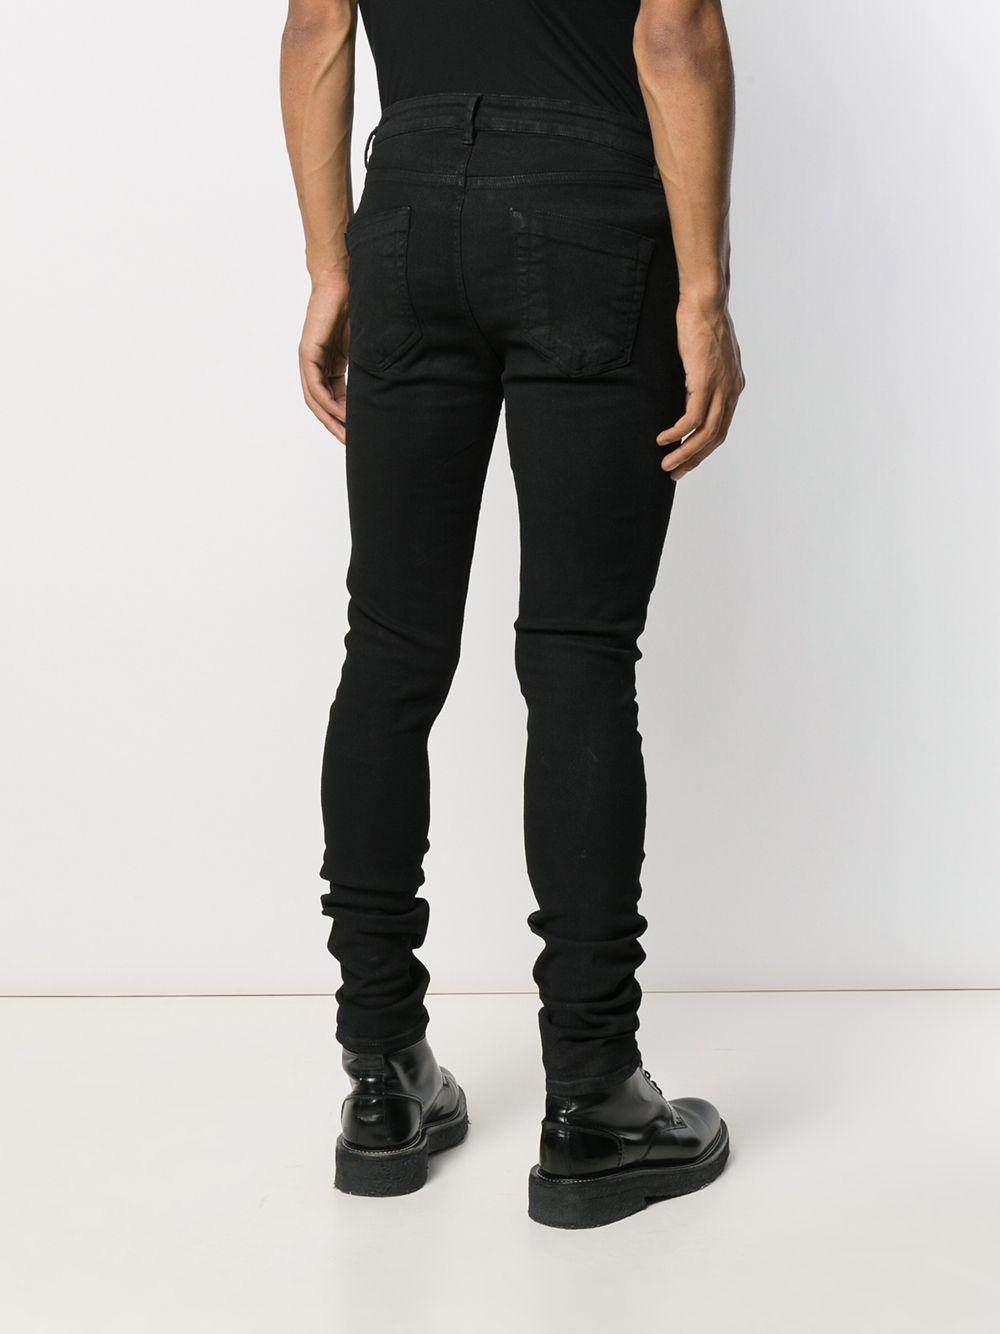 Rick Owens Drkshdw Denim Mid-rise Skinny Jeans in Black for Men - Lyst